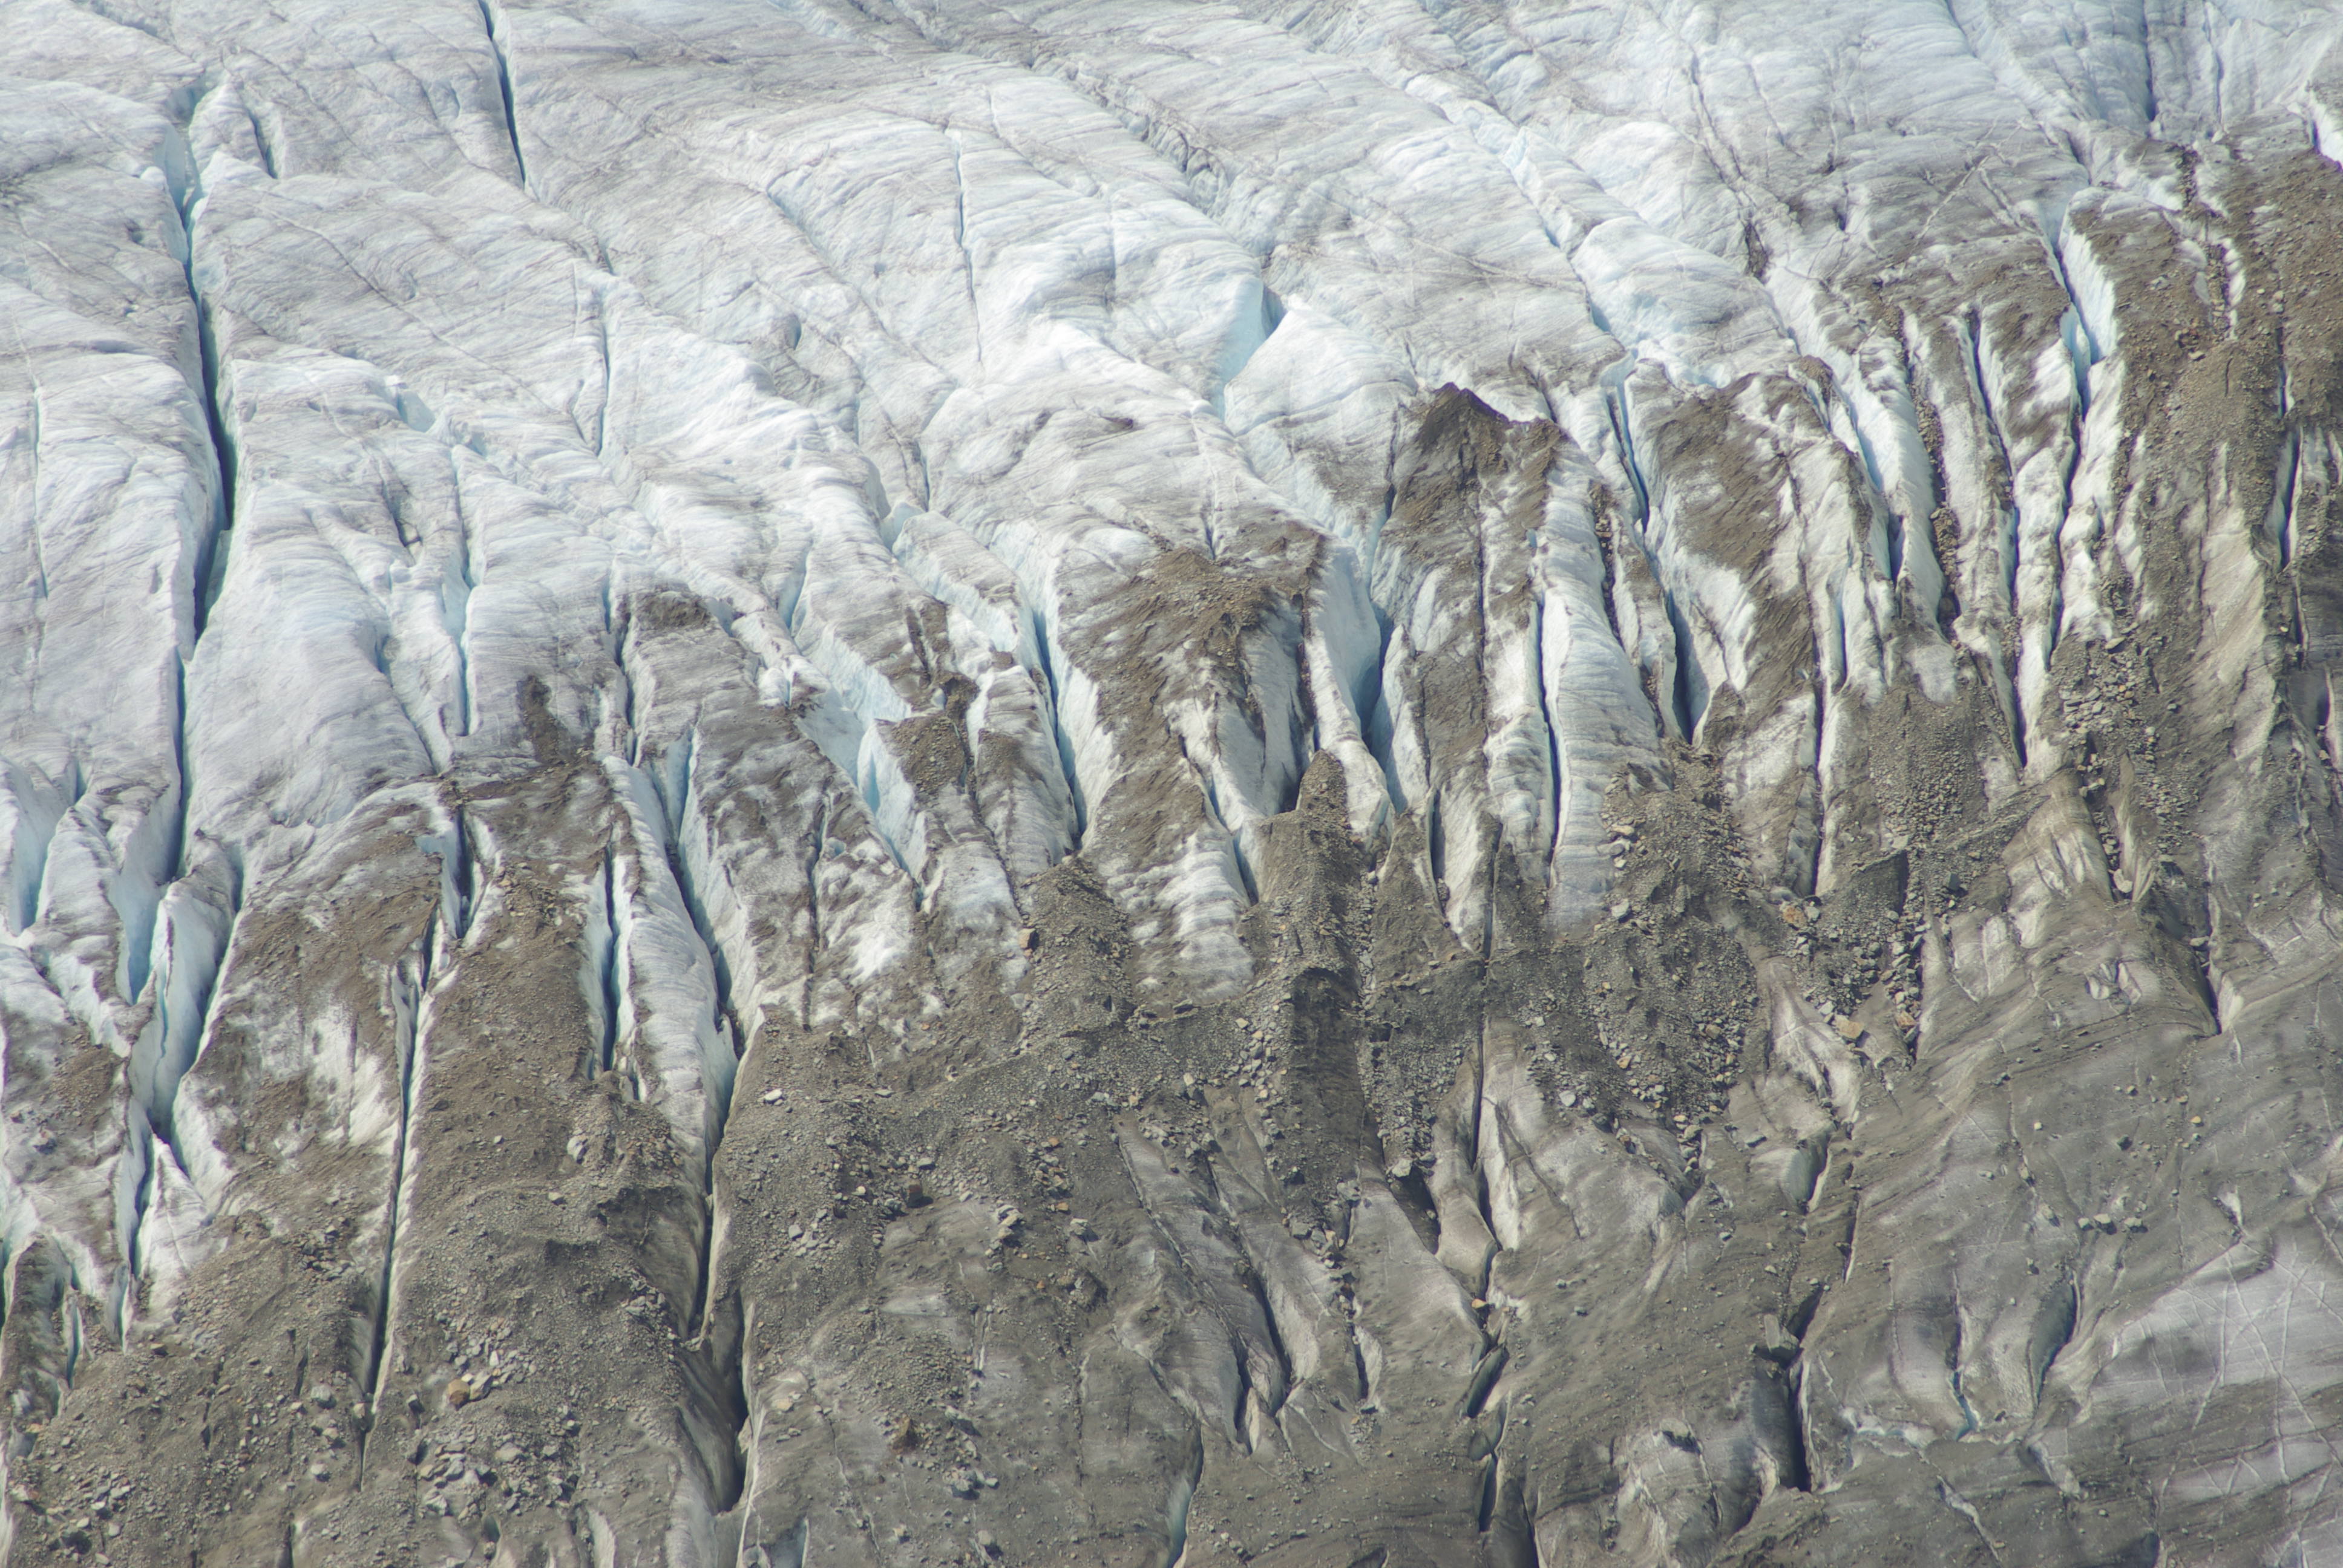 Lateral moraine on the Aletsch Glacier photo by Zoltán Karancsi